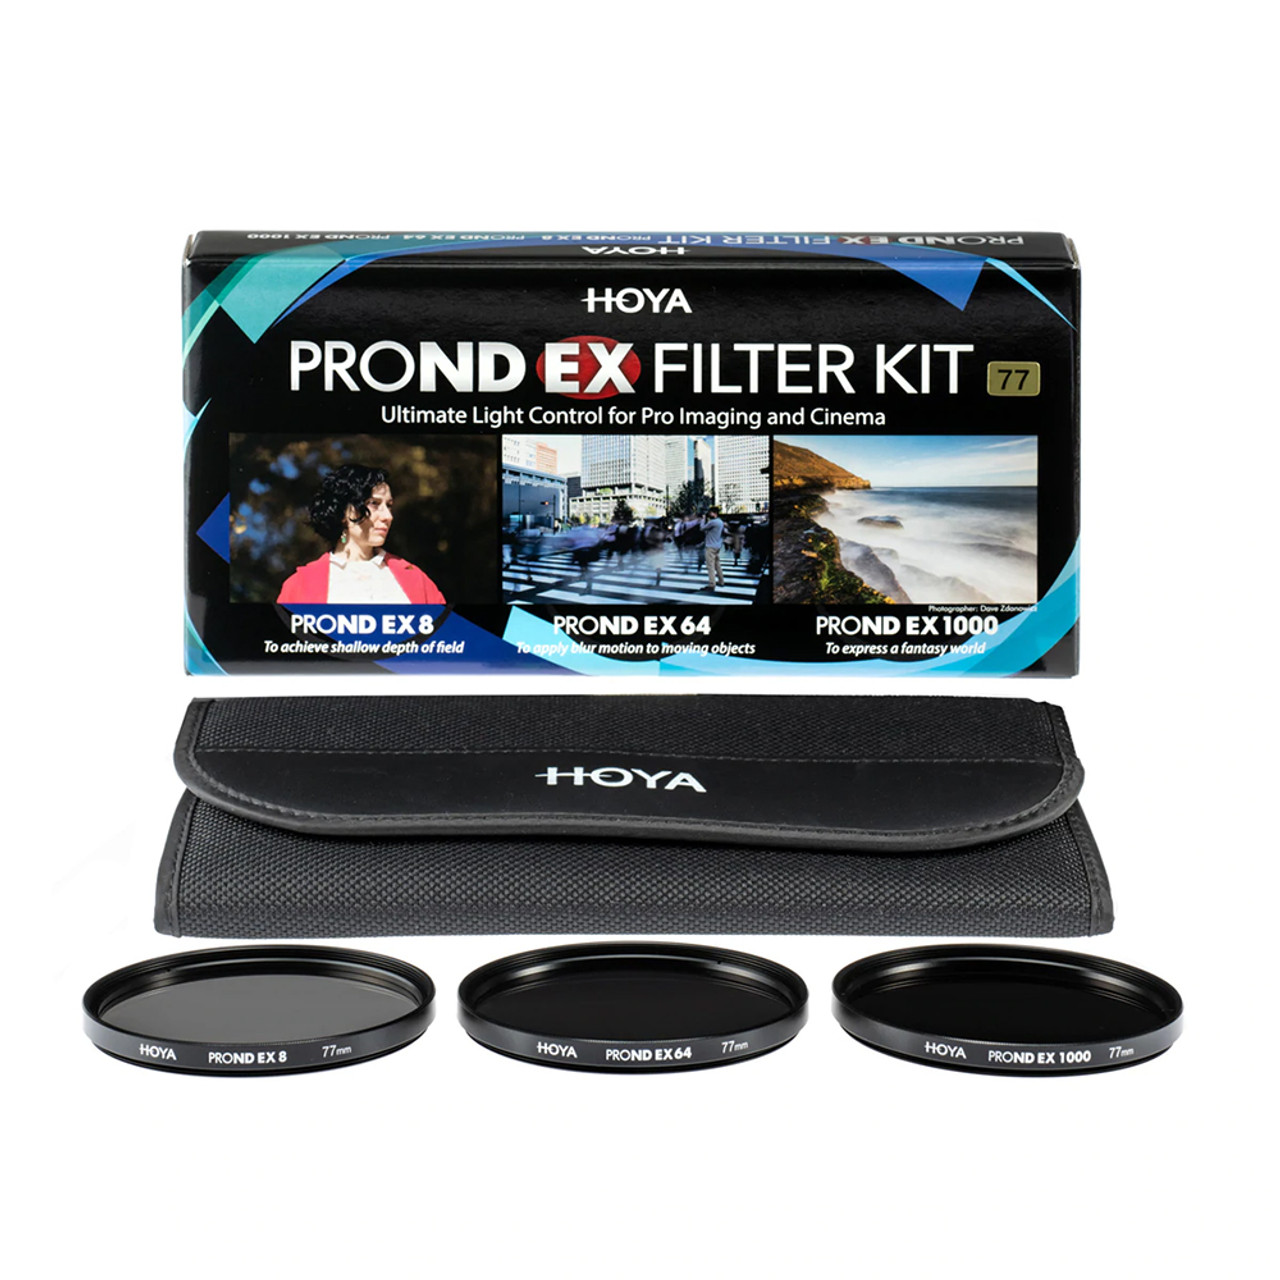 HOYA PROND EX FILTER KIT 62MM (3 FILTERS + WALLET)